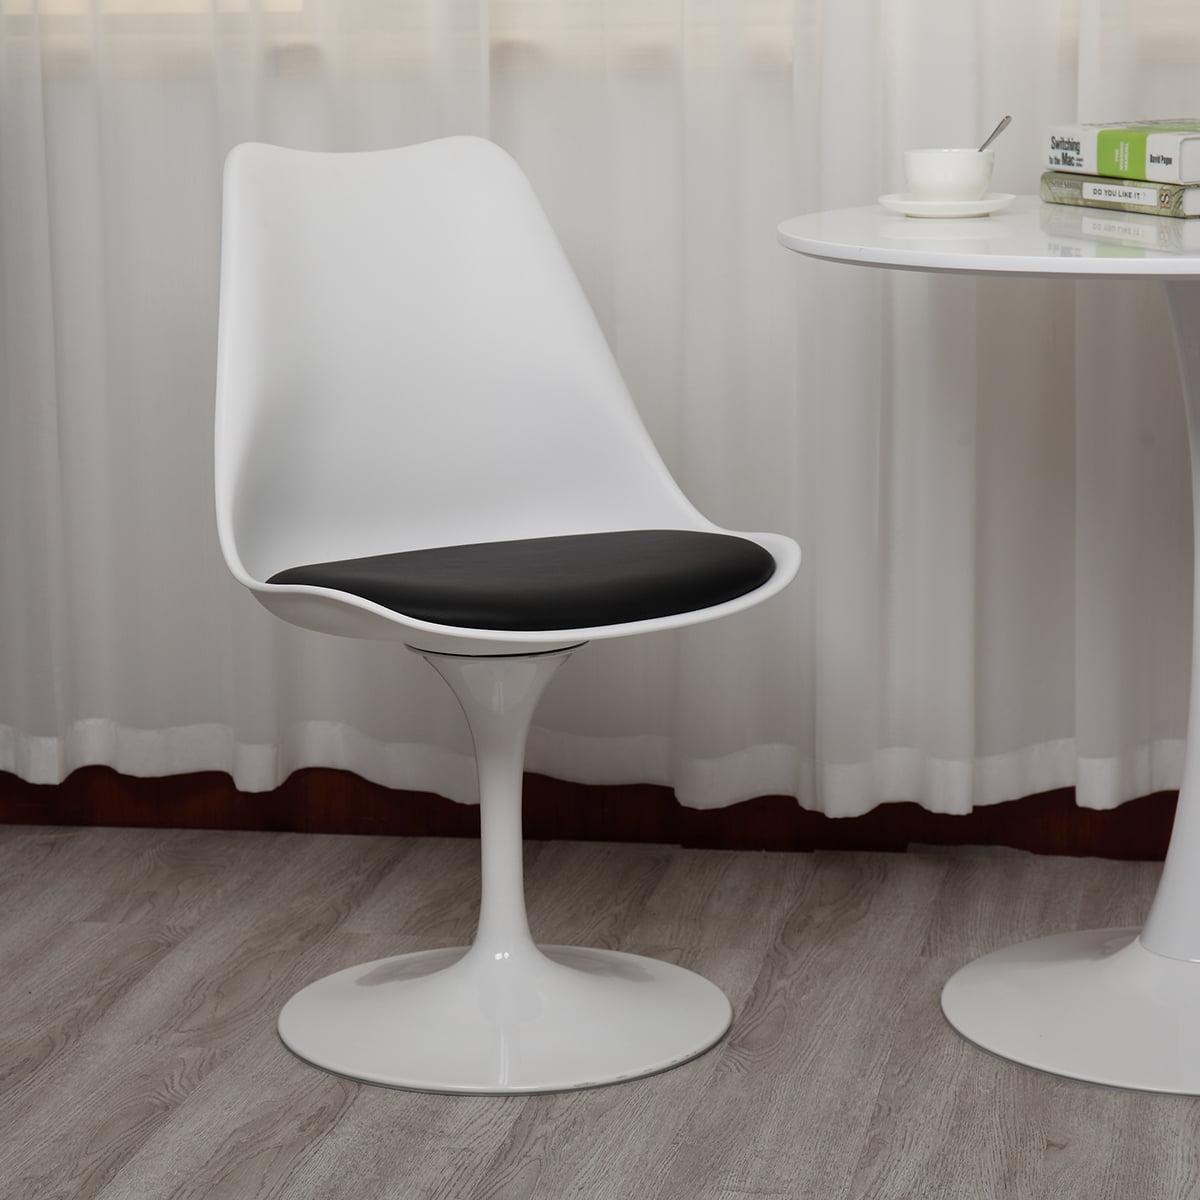 Unique Swivel Kitchen Chairs for Simple Design